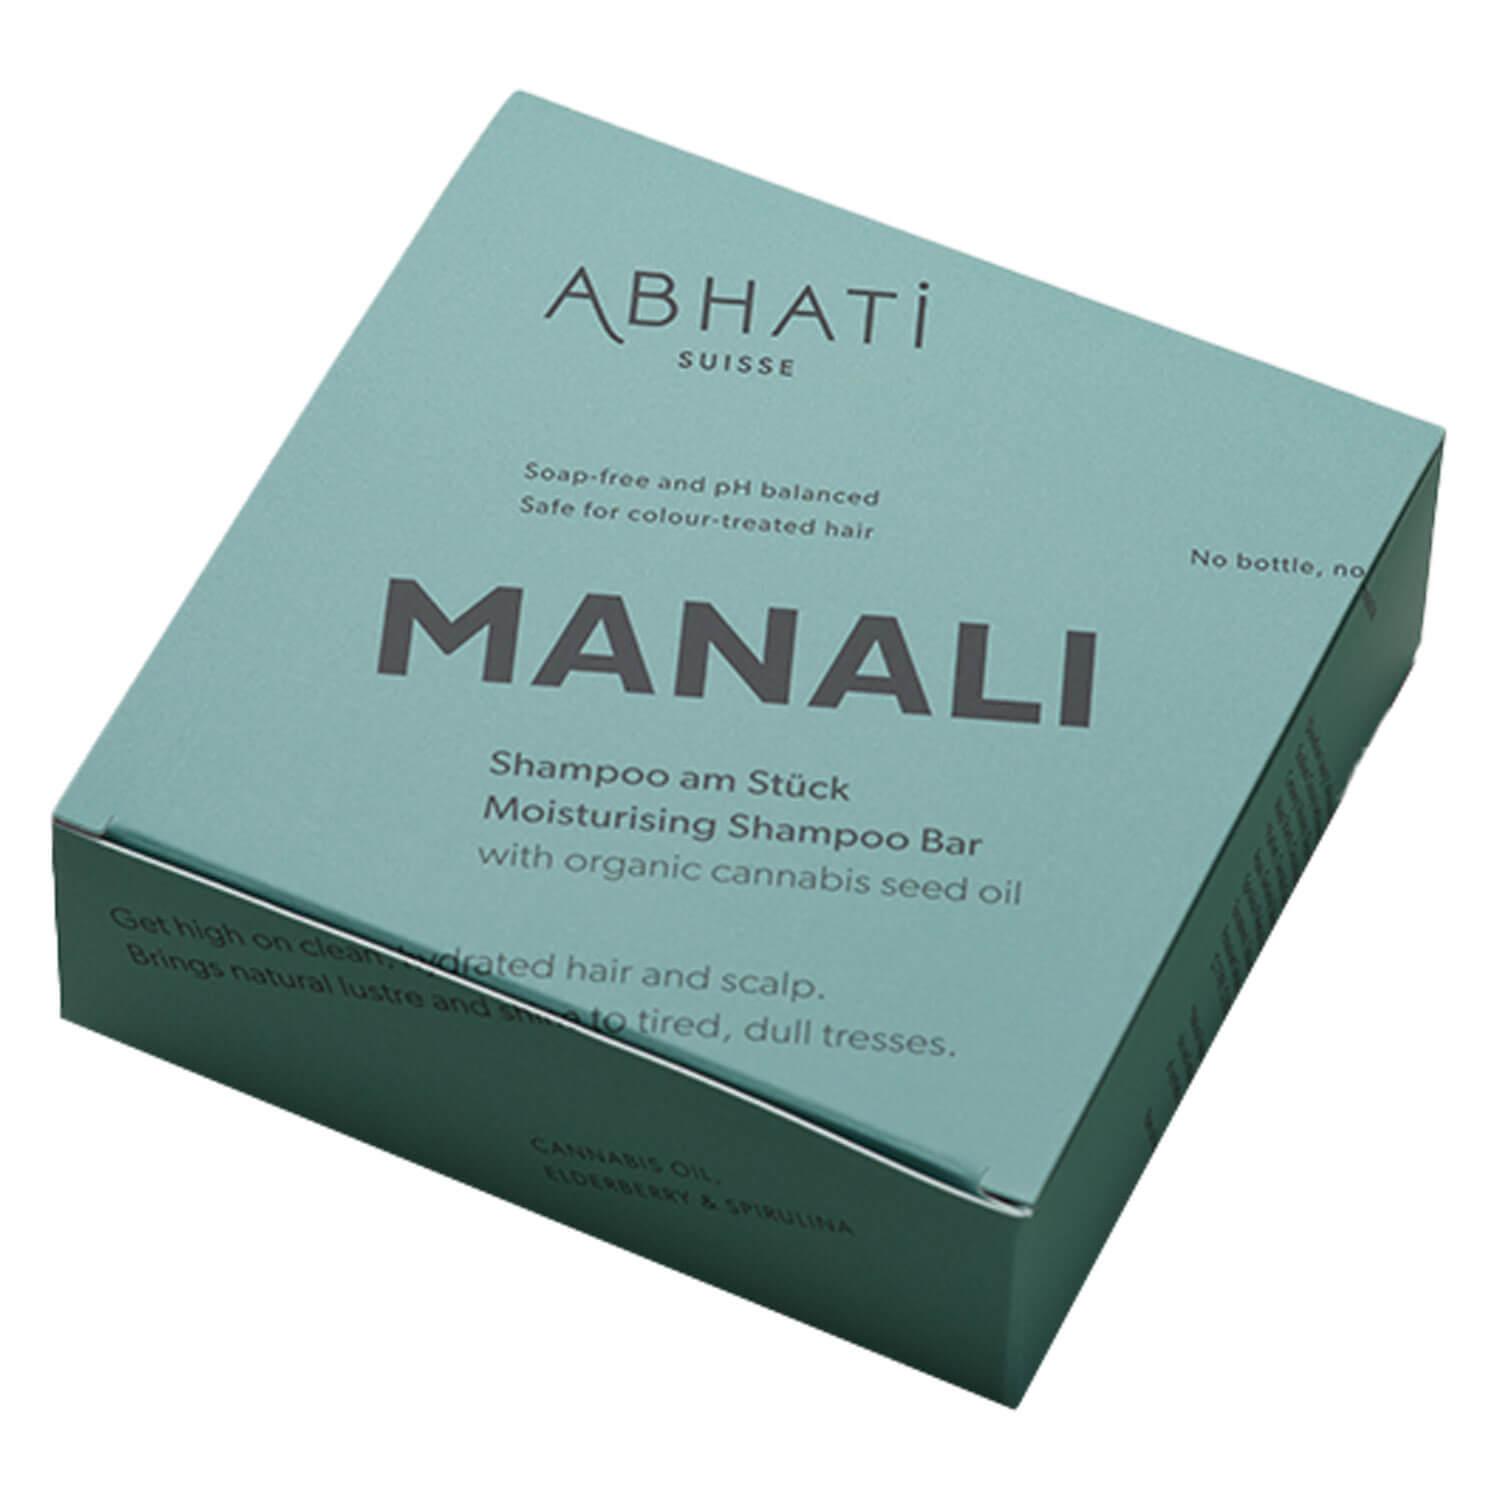 ABHATI Suisse - Manali Moisturising Shampoo Bar